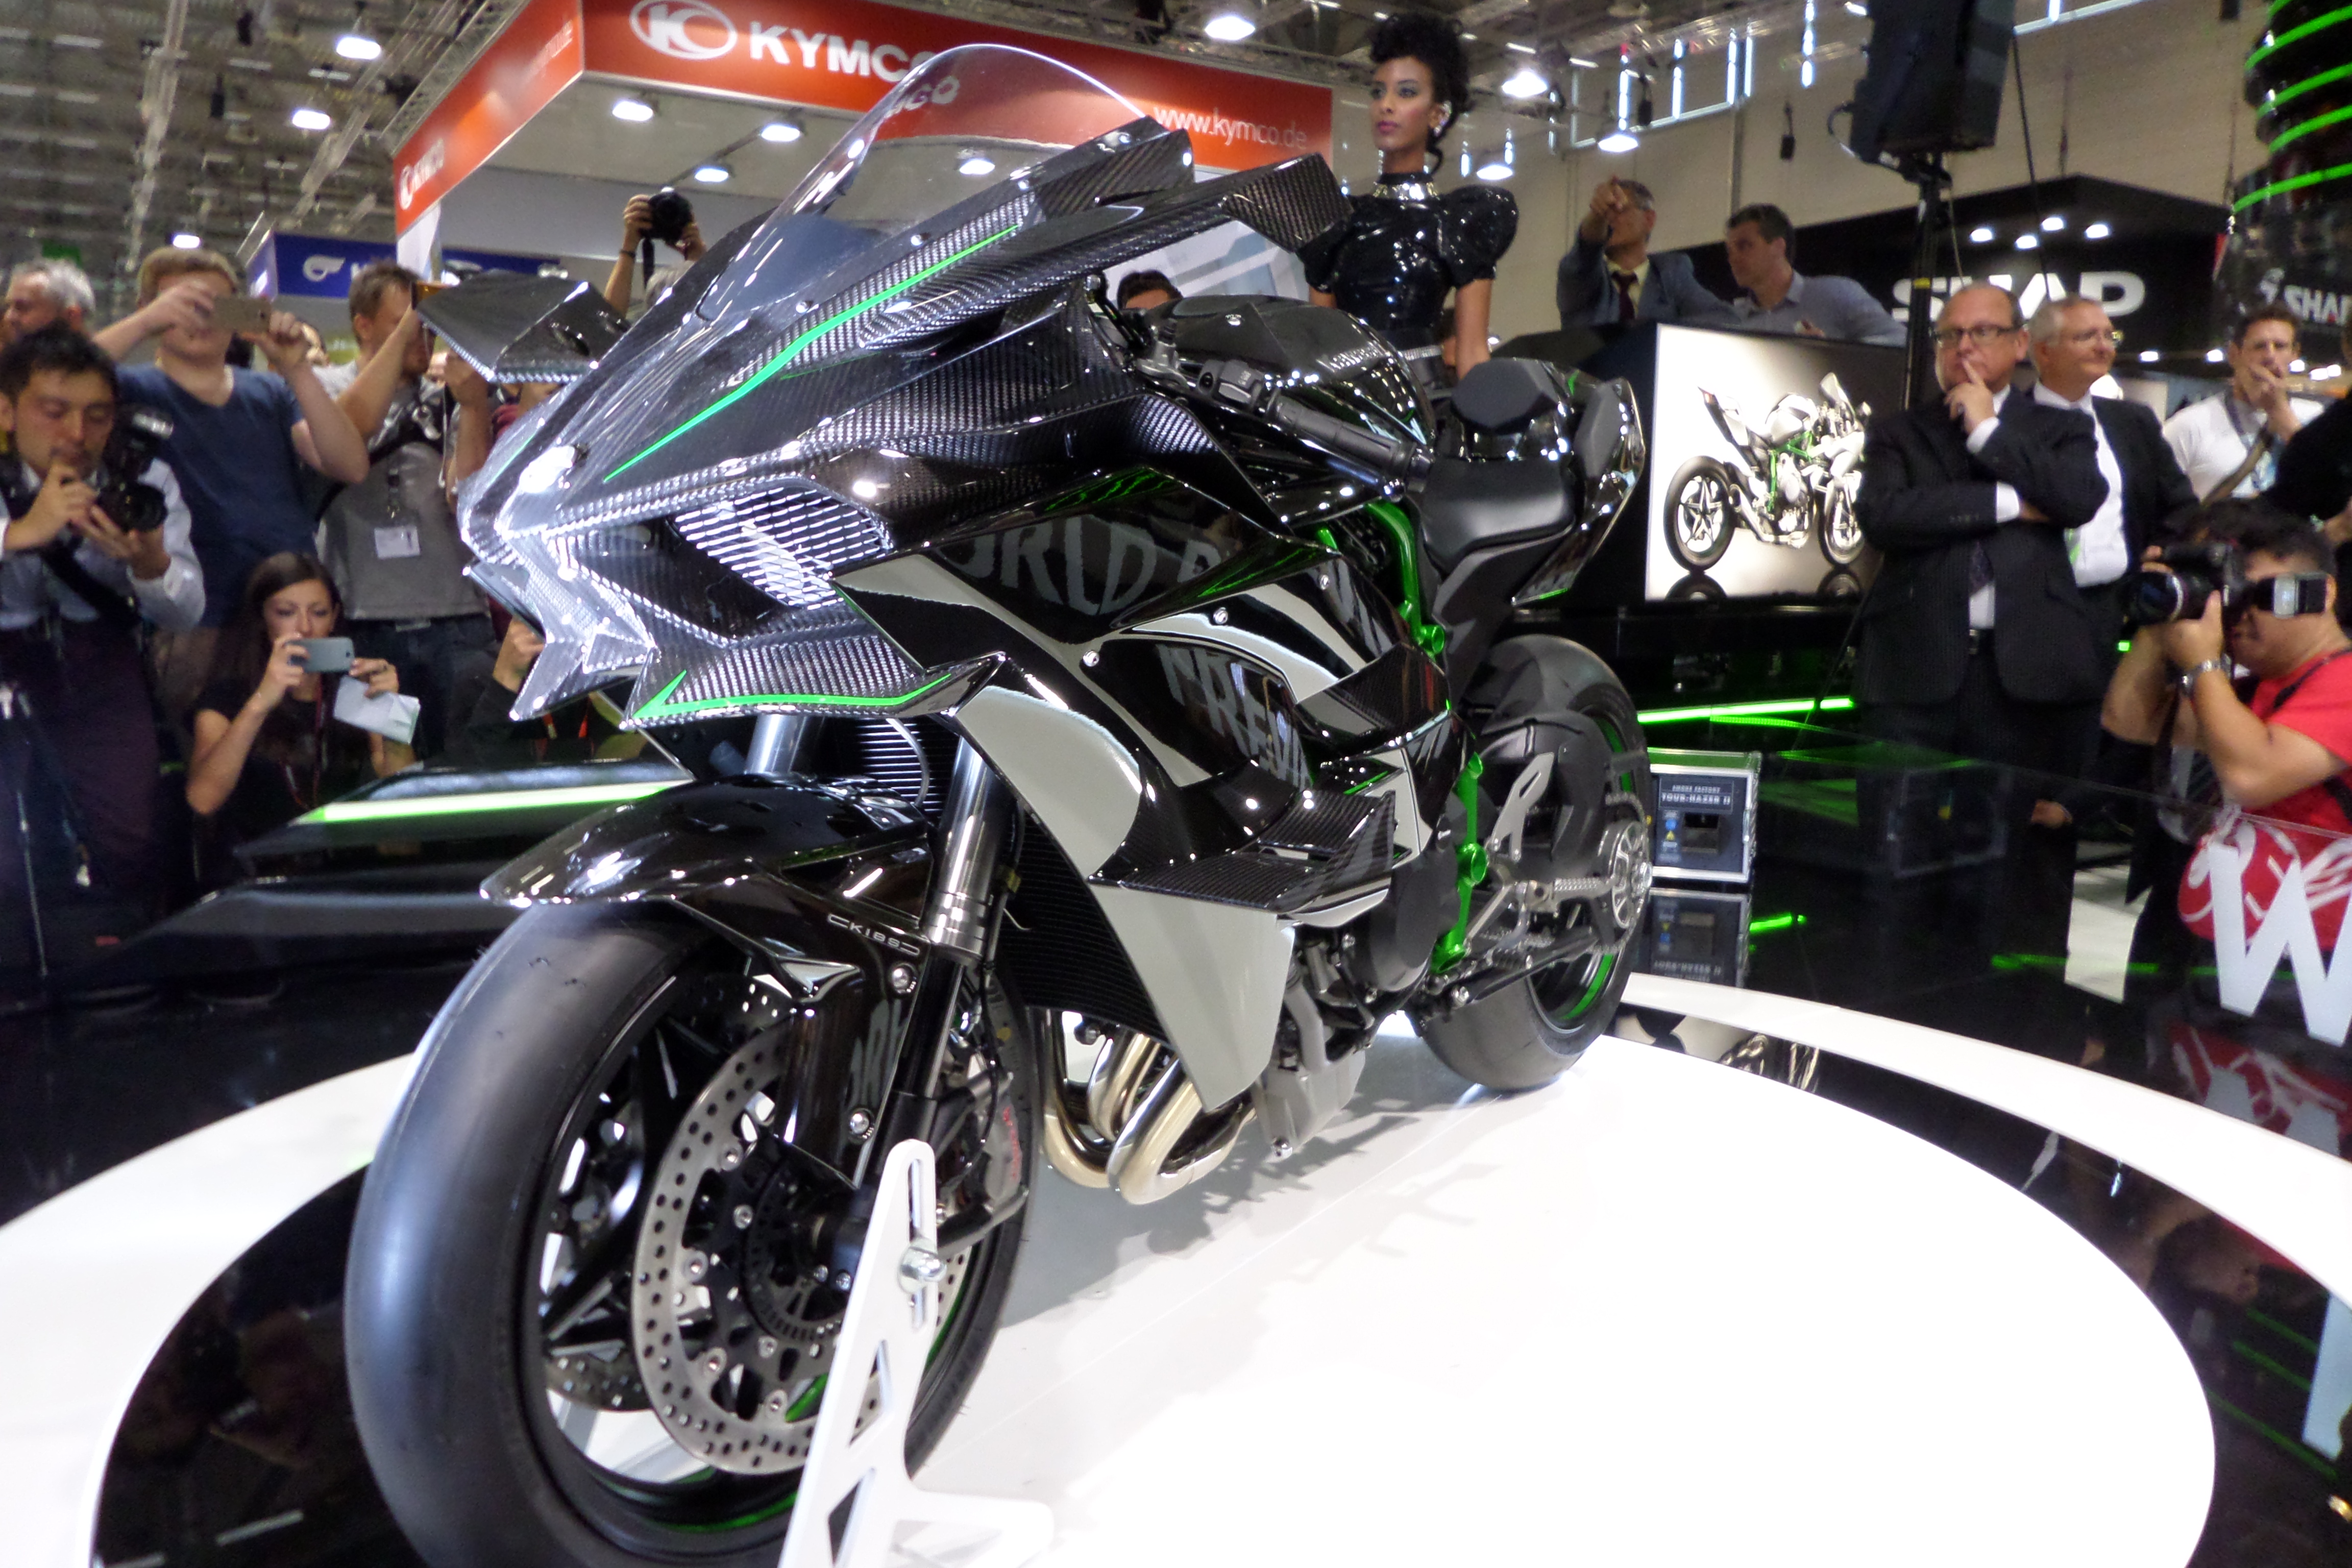 Intermot 2014: Kawasaki Ninja H2 video and uber gallery